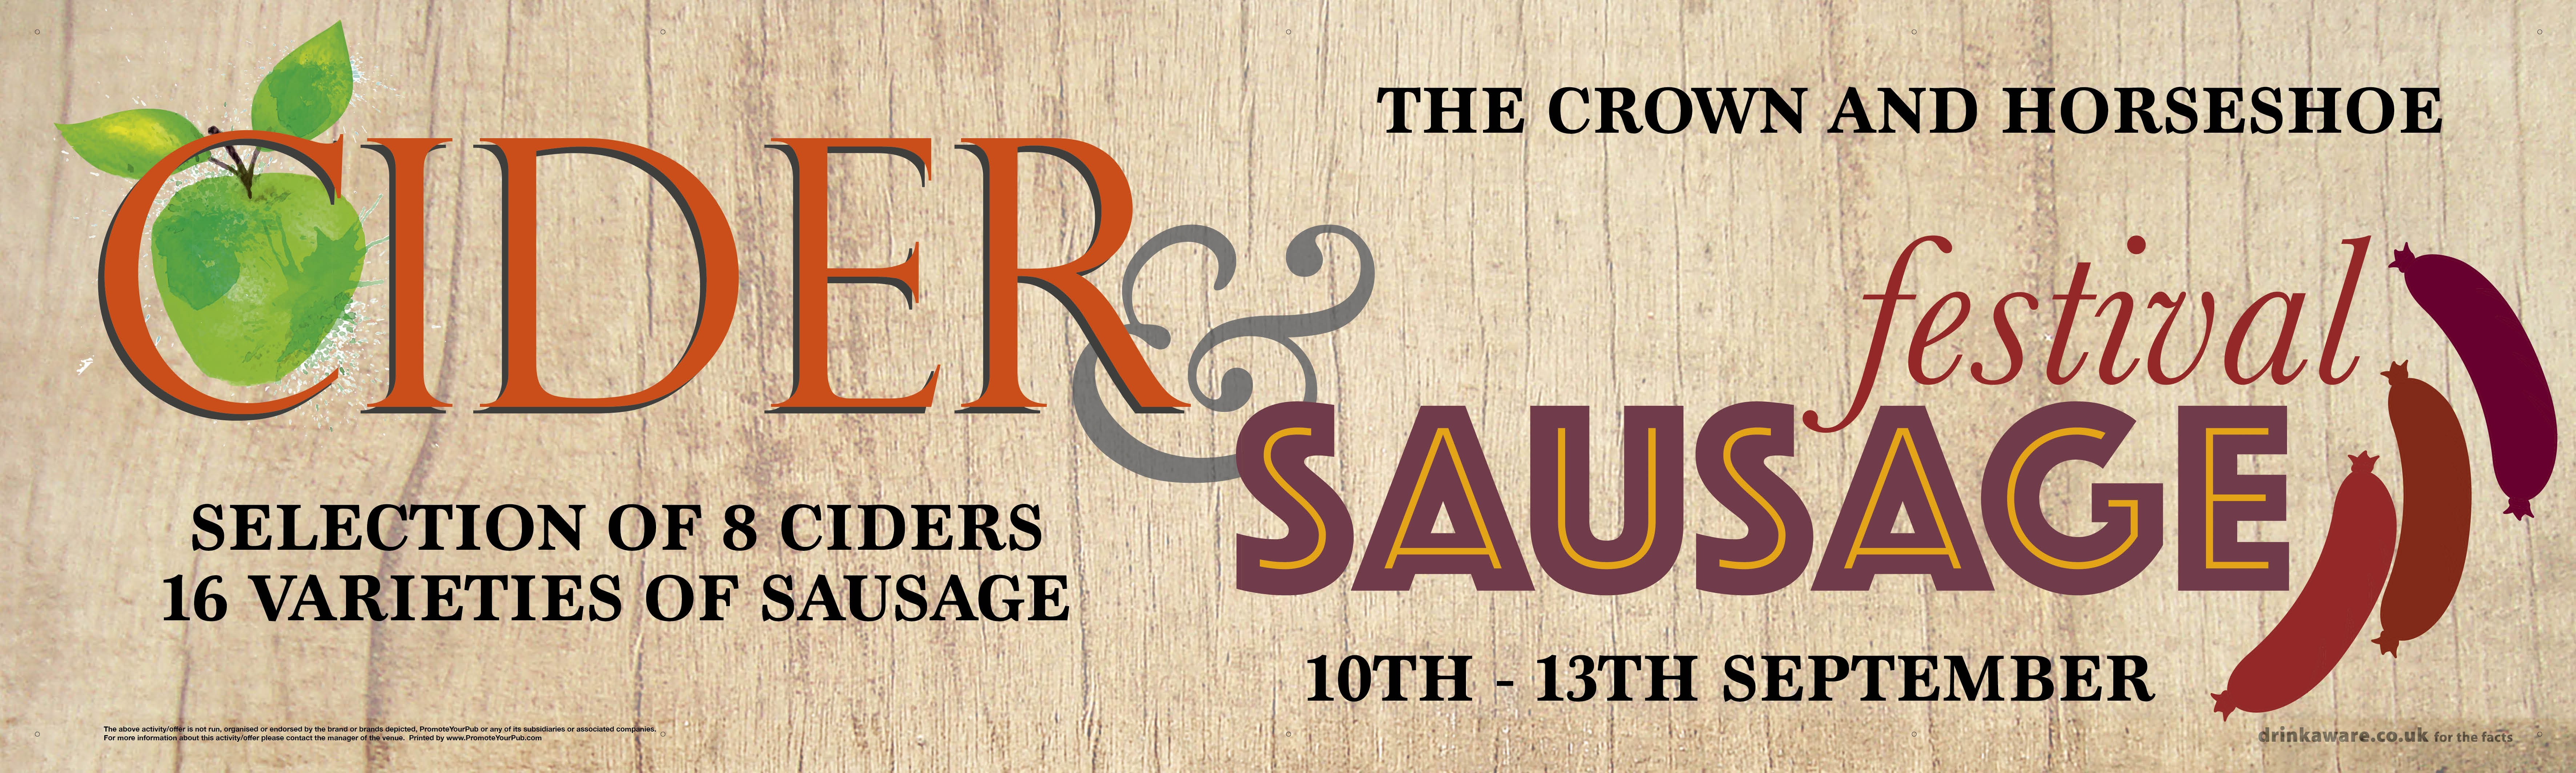 Cider and Sausage Festival Banner (sml)